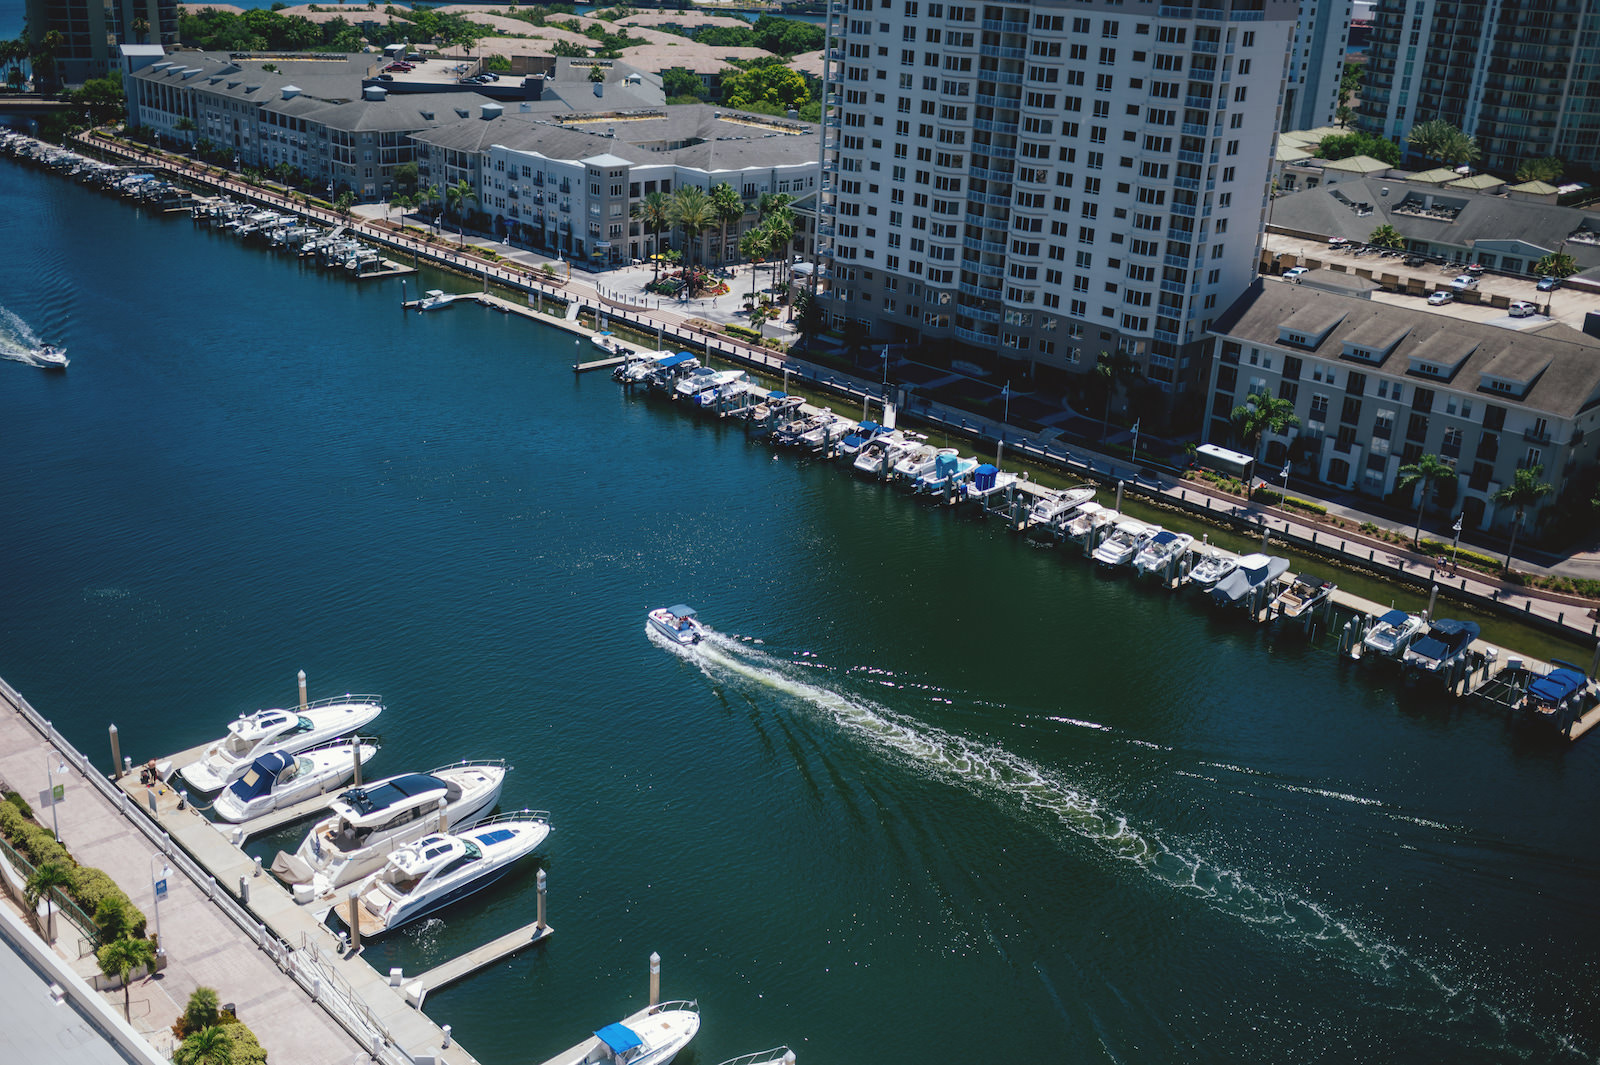 Aerial View of Tampa Intracoastal and Marina